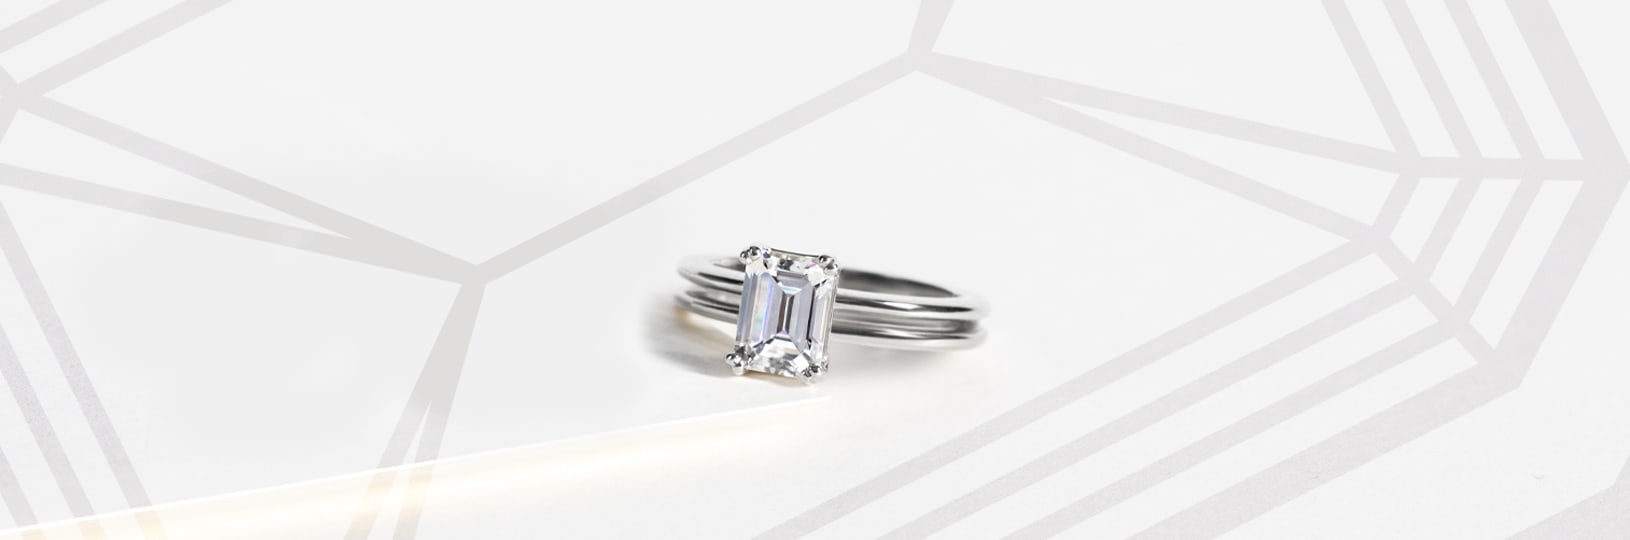 An engagement ring featuring an emerald cut center stone